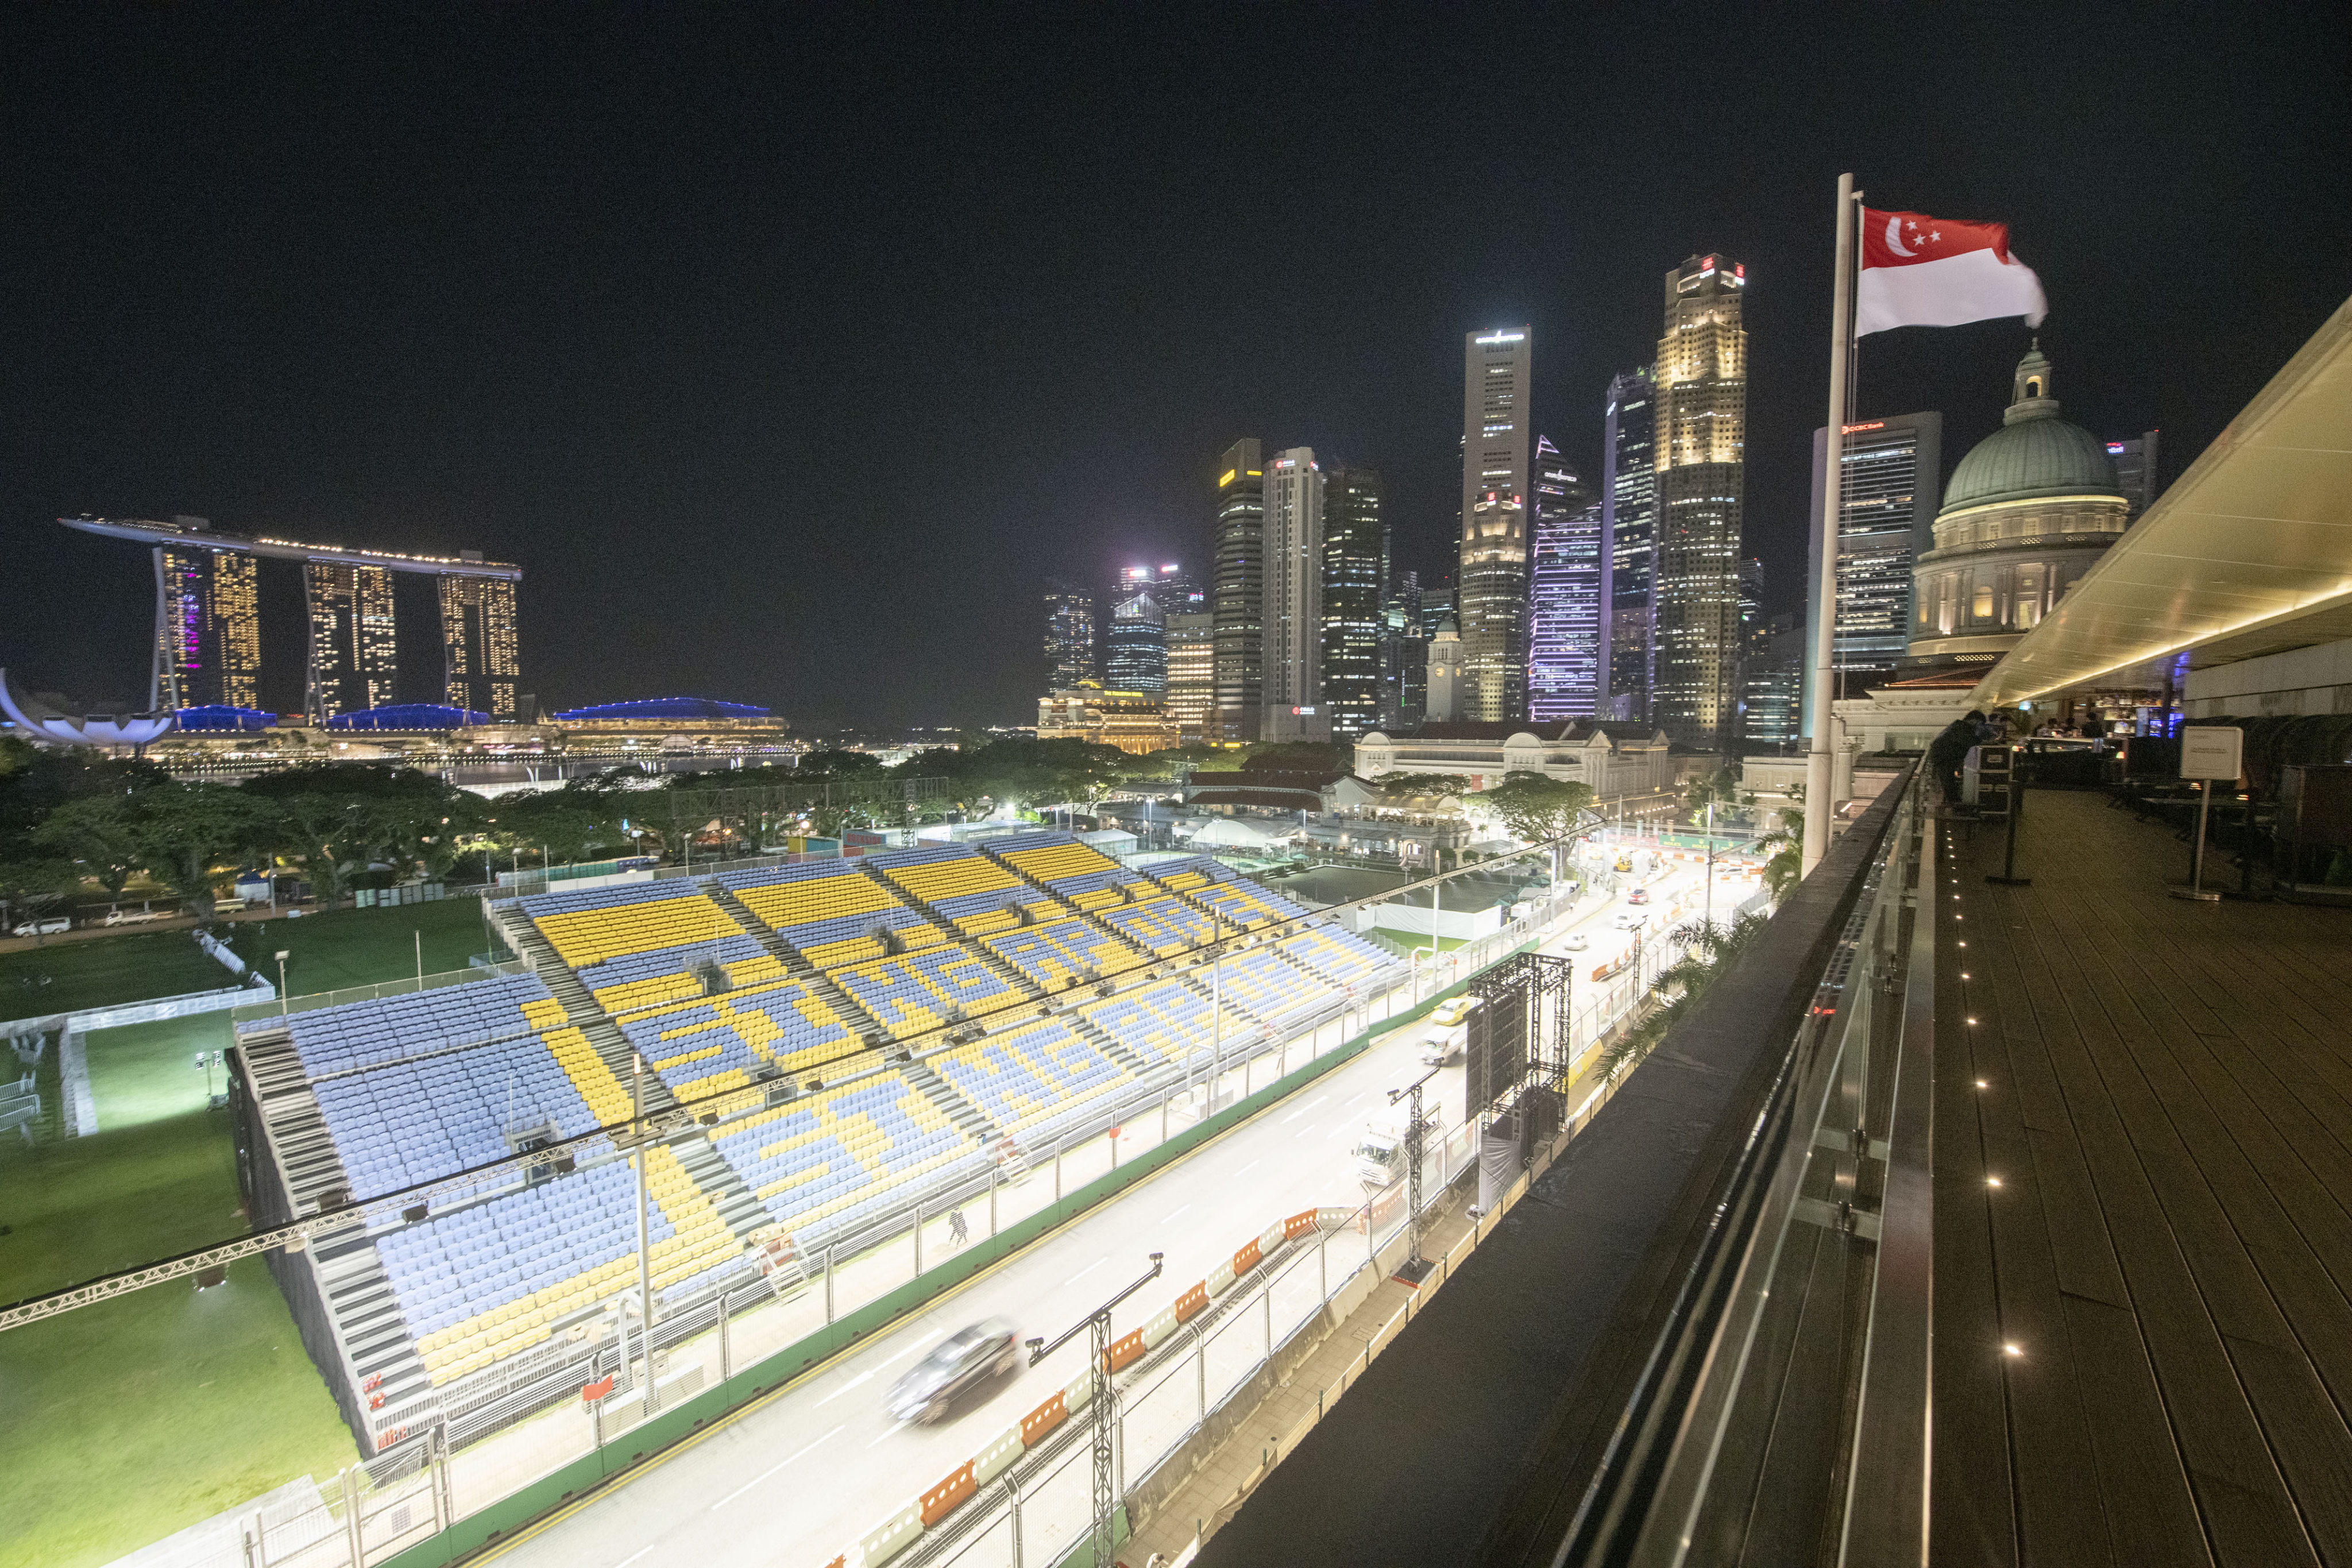 The Marina Bay Street Circuit ahead of the weekend’s Singapore Grand Prix. Photo: Xinhua